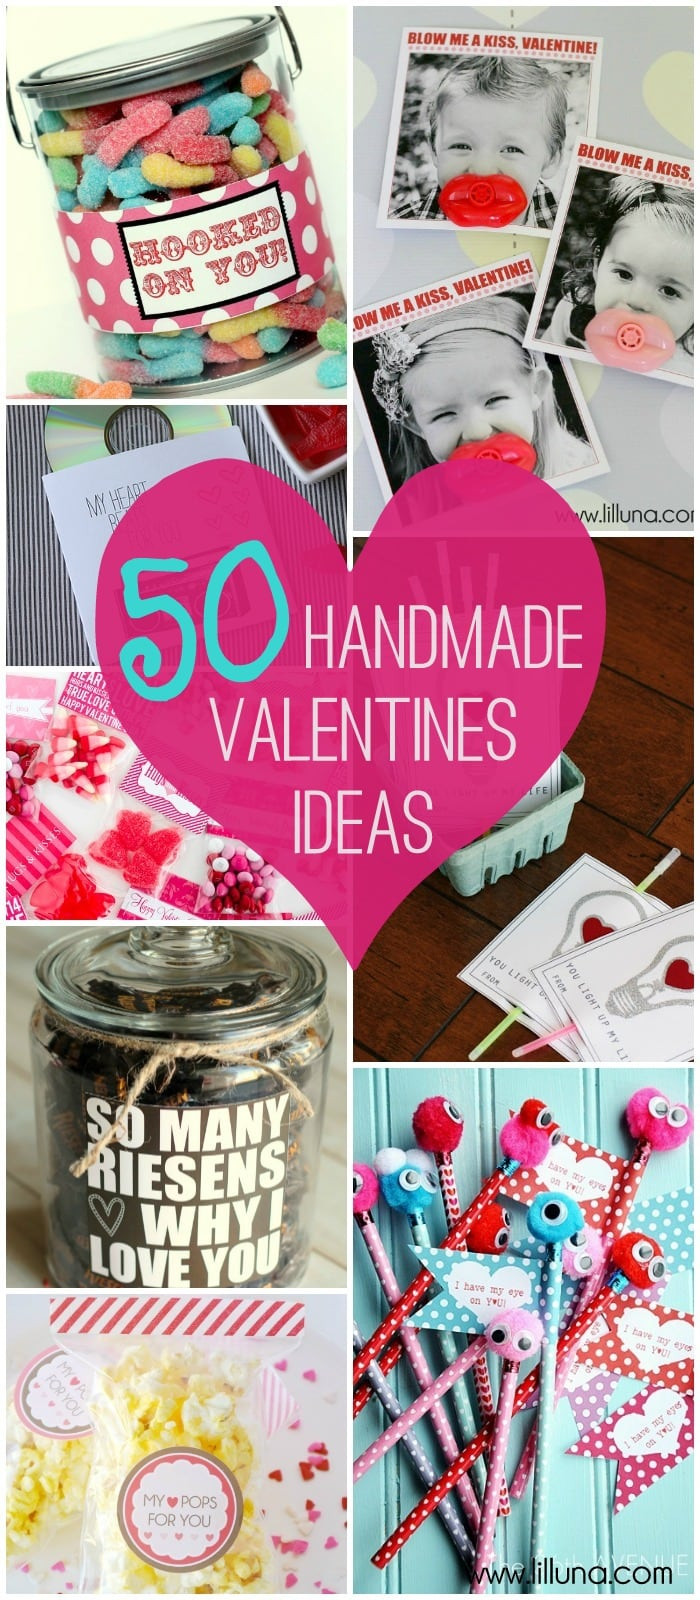 Cool Valentines Day Gift Ideas
 Valentines Ideas